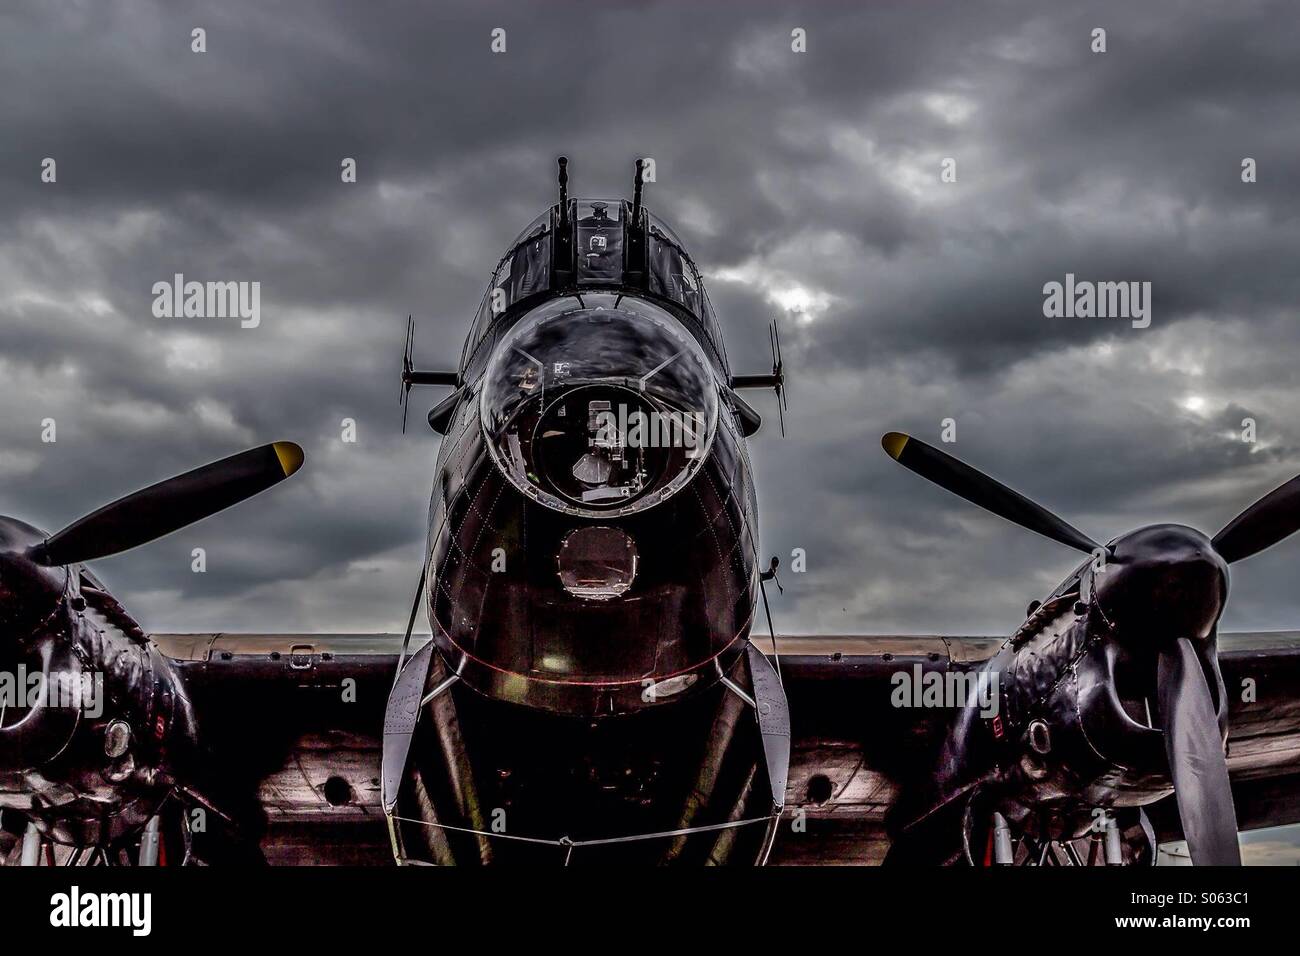 Avro Lancaster Stockfoto